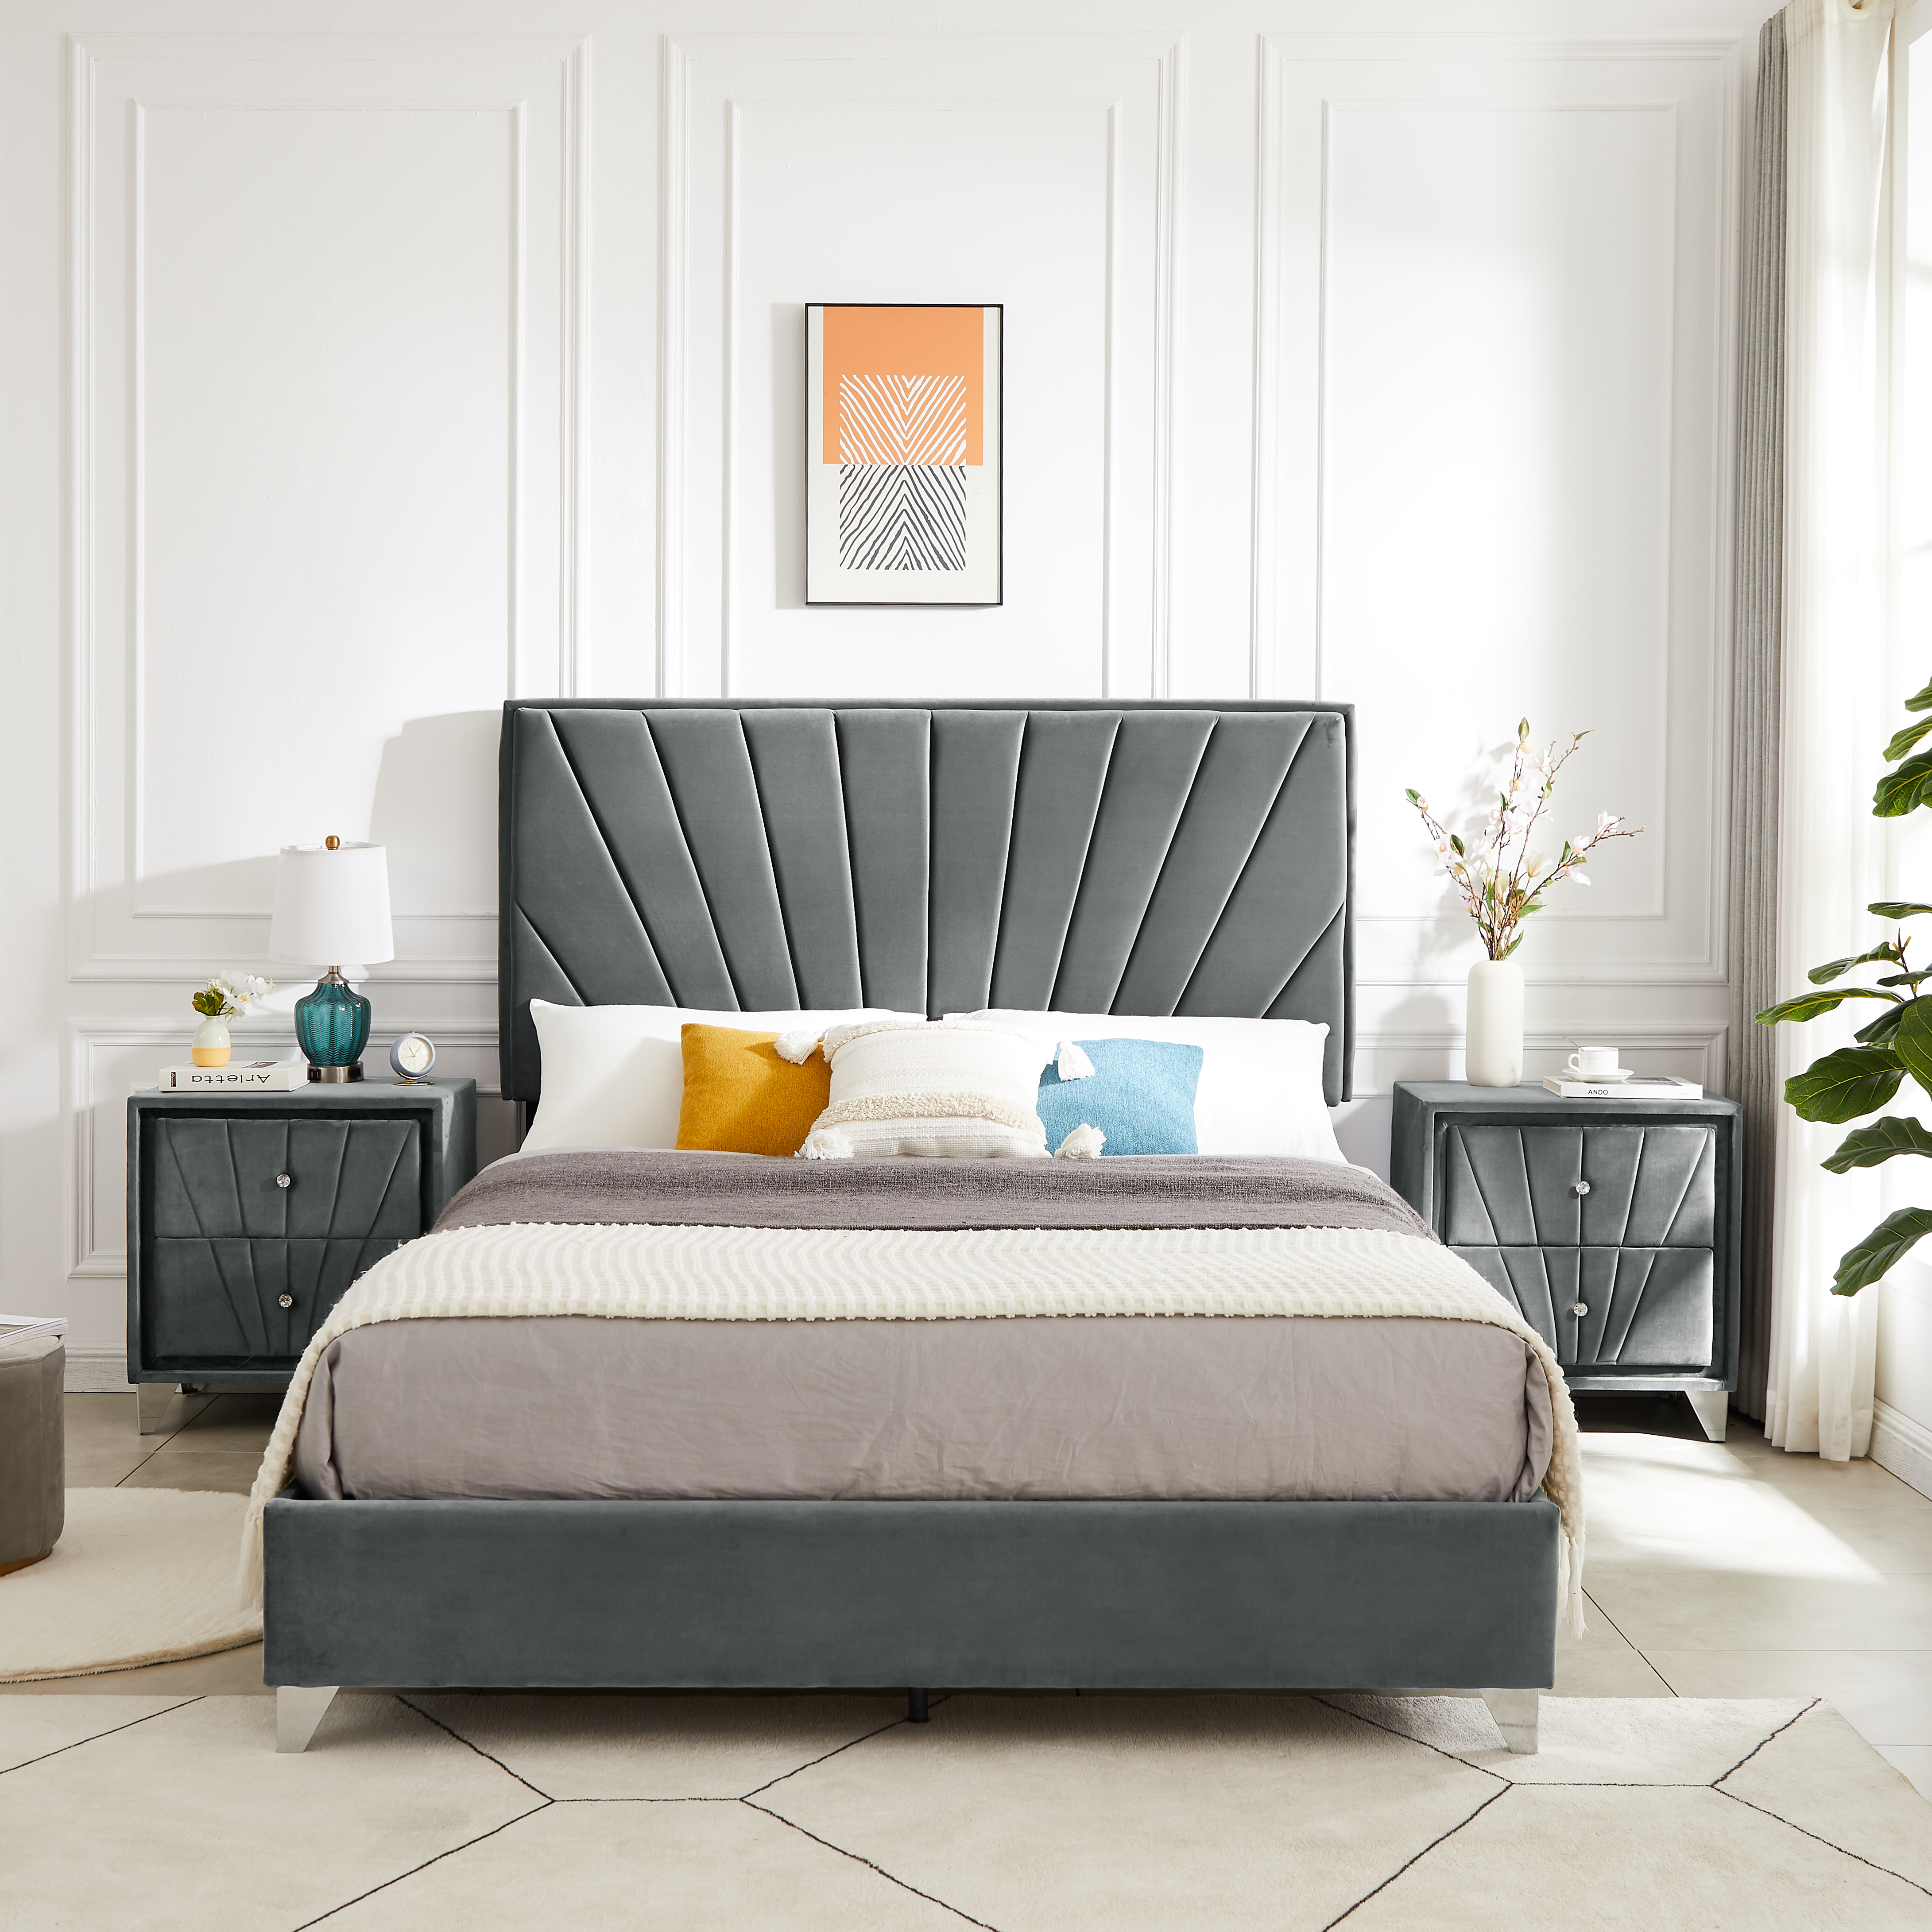 B108 Beautiful line stripe cushion headboard Queen bed, strong wooden slats + metal support feet, Gray Flannelette-CASAINC